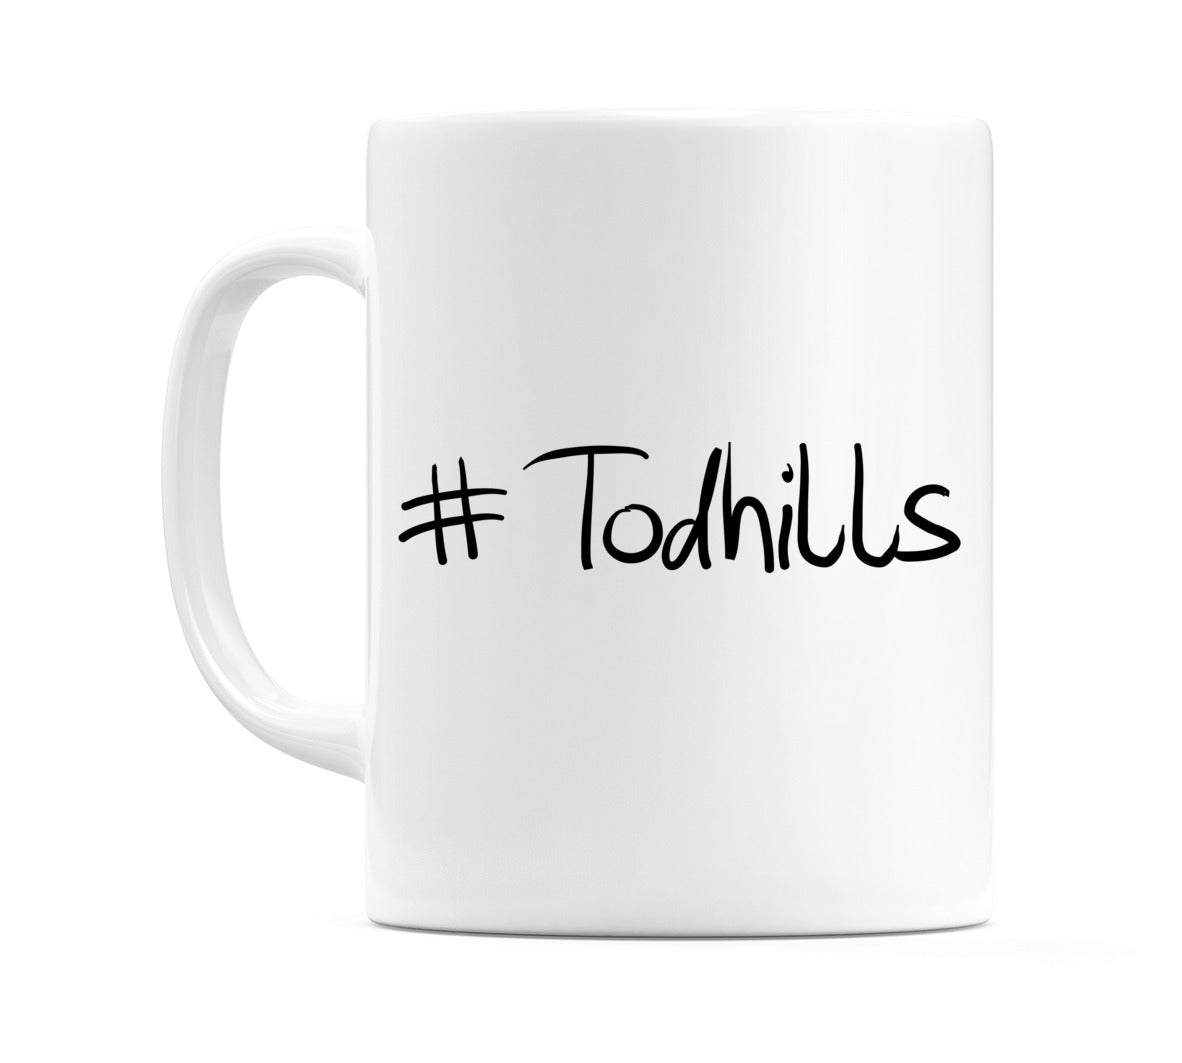 #Todhills Mug